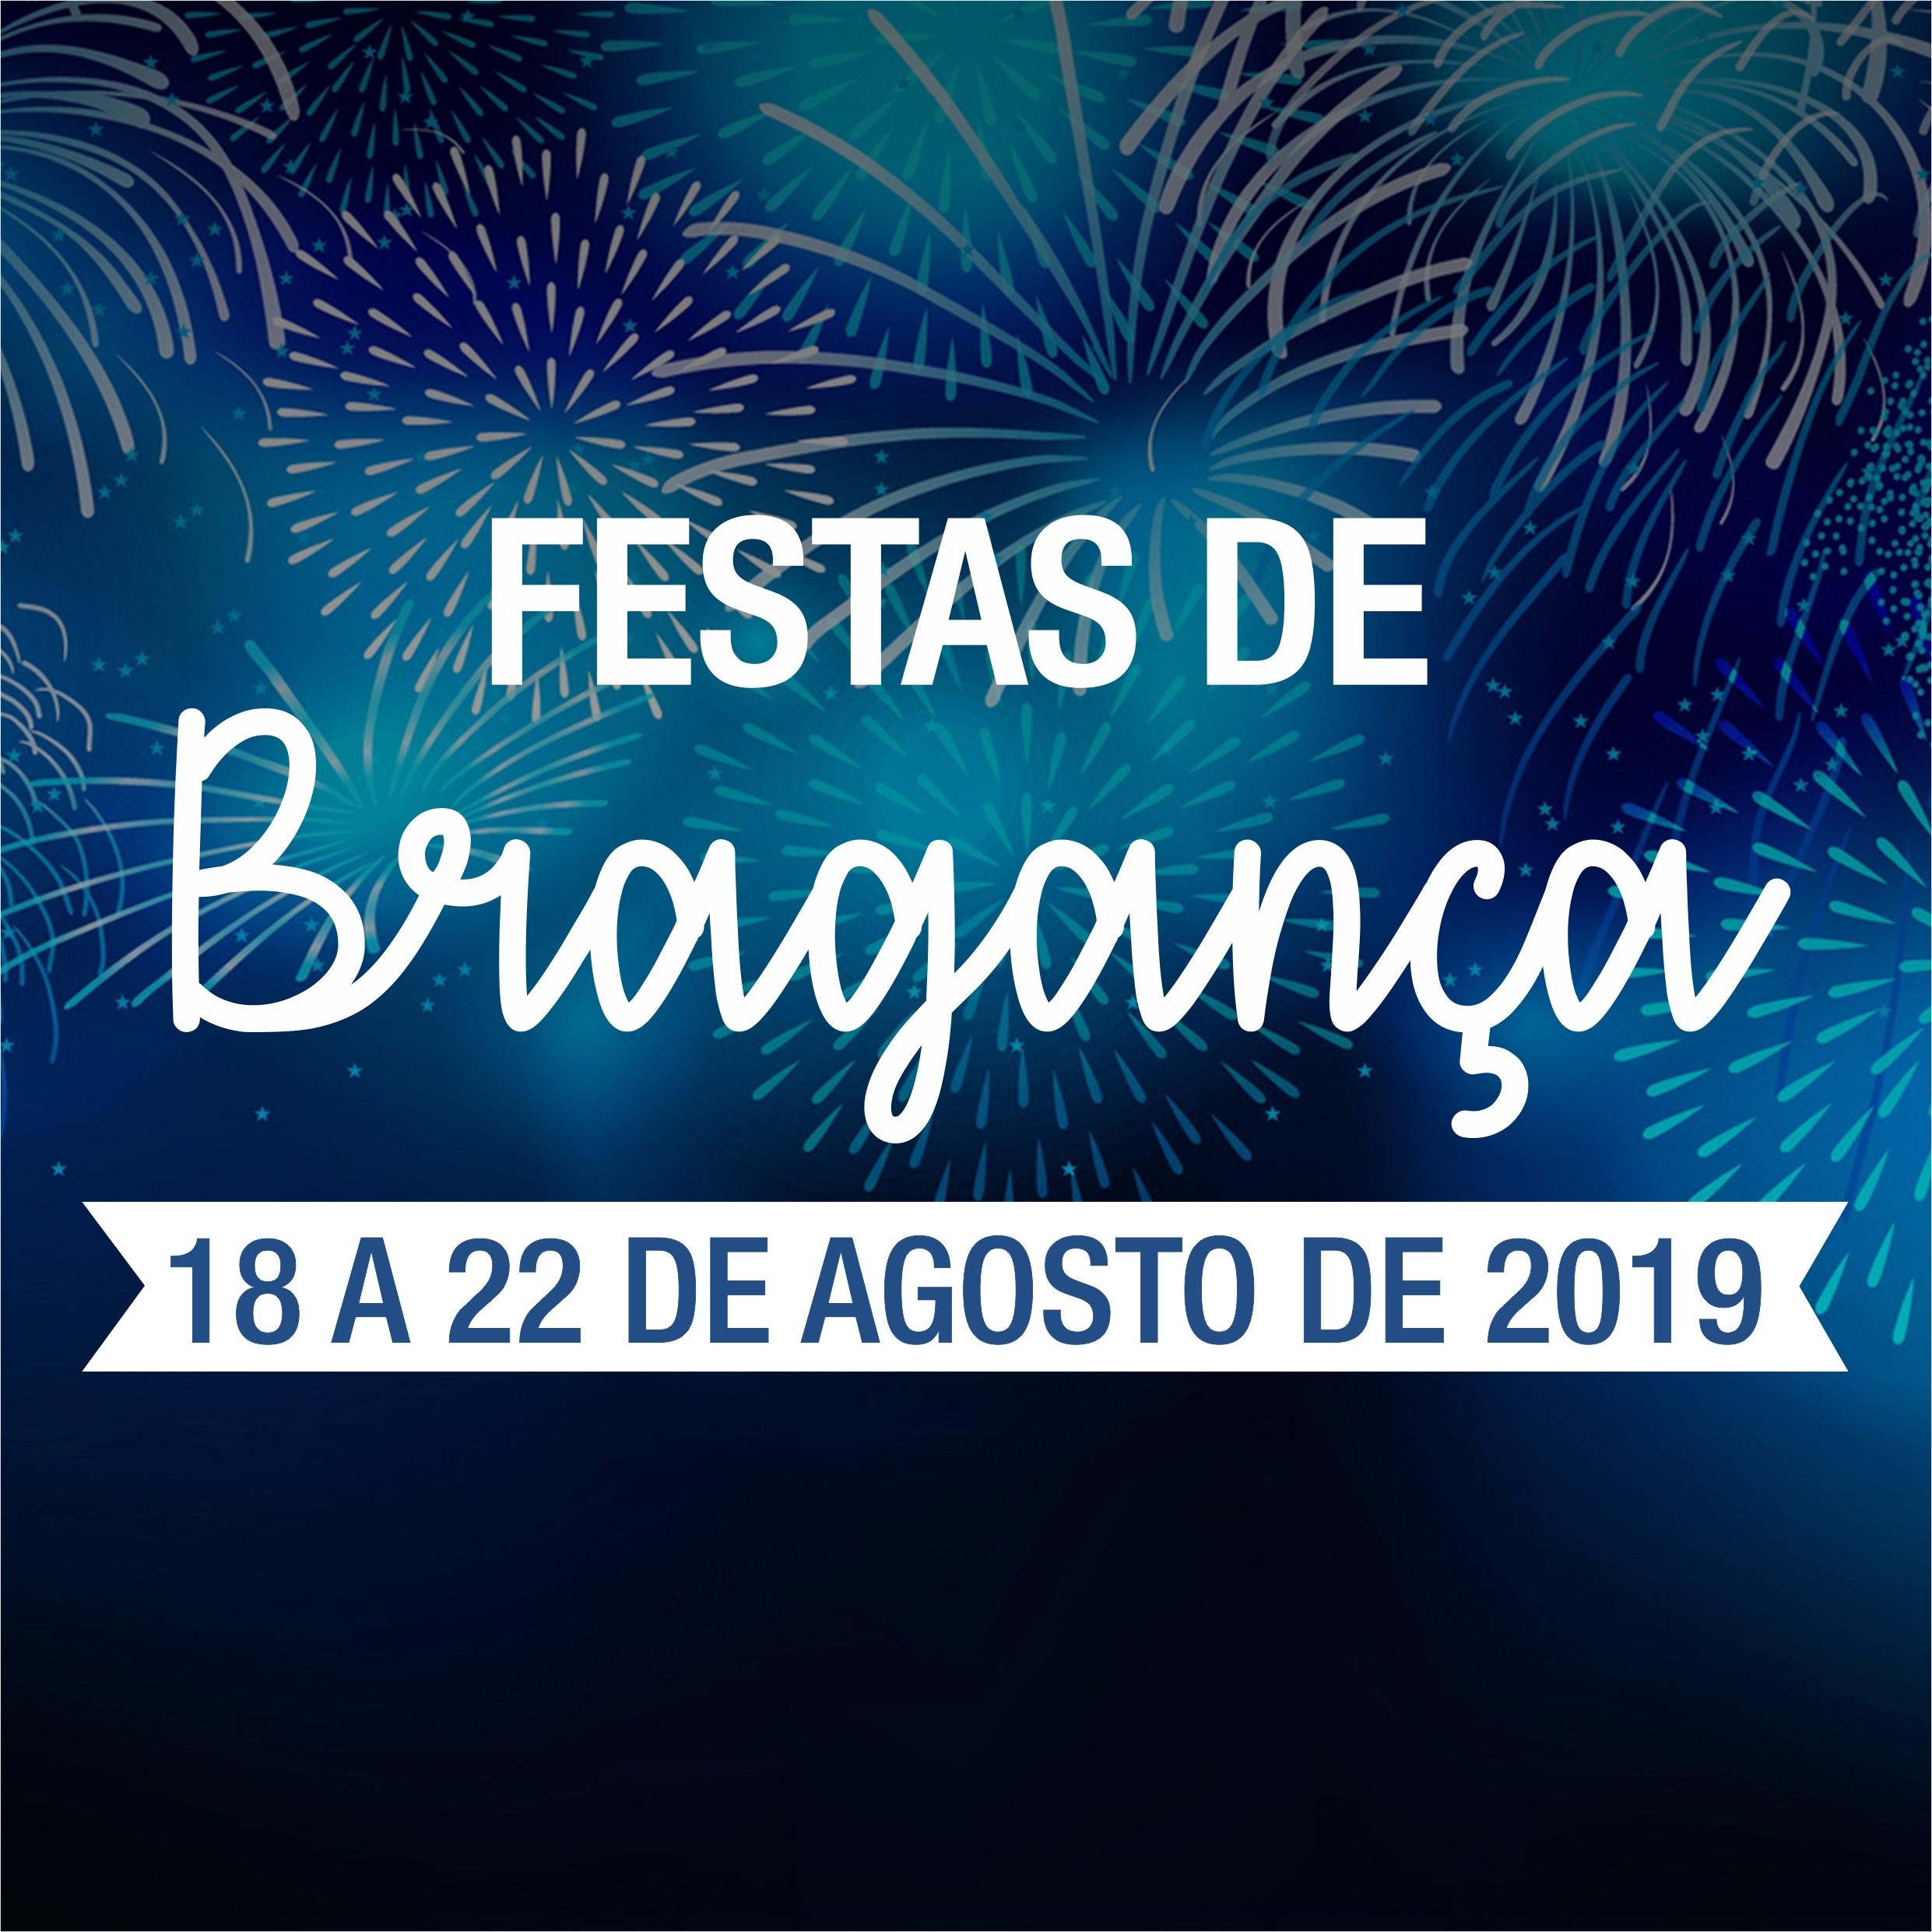 Festas de Bragança 